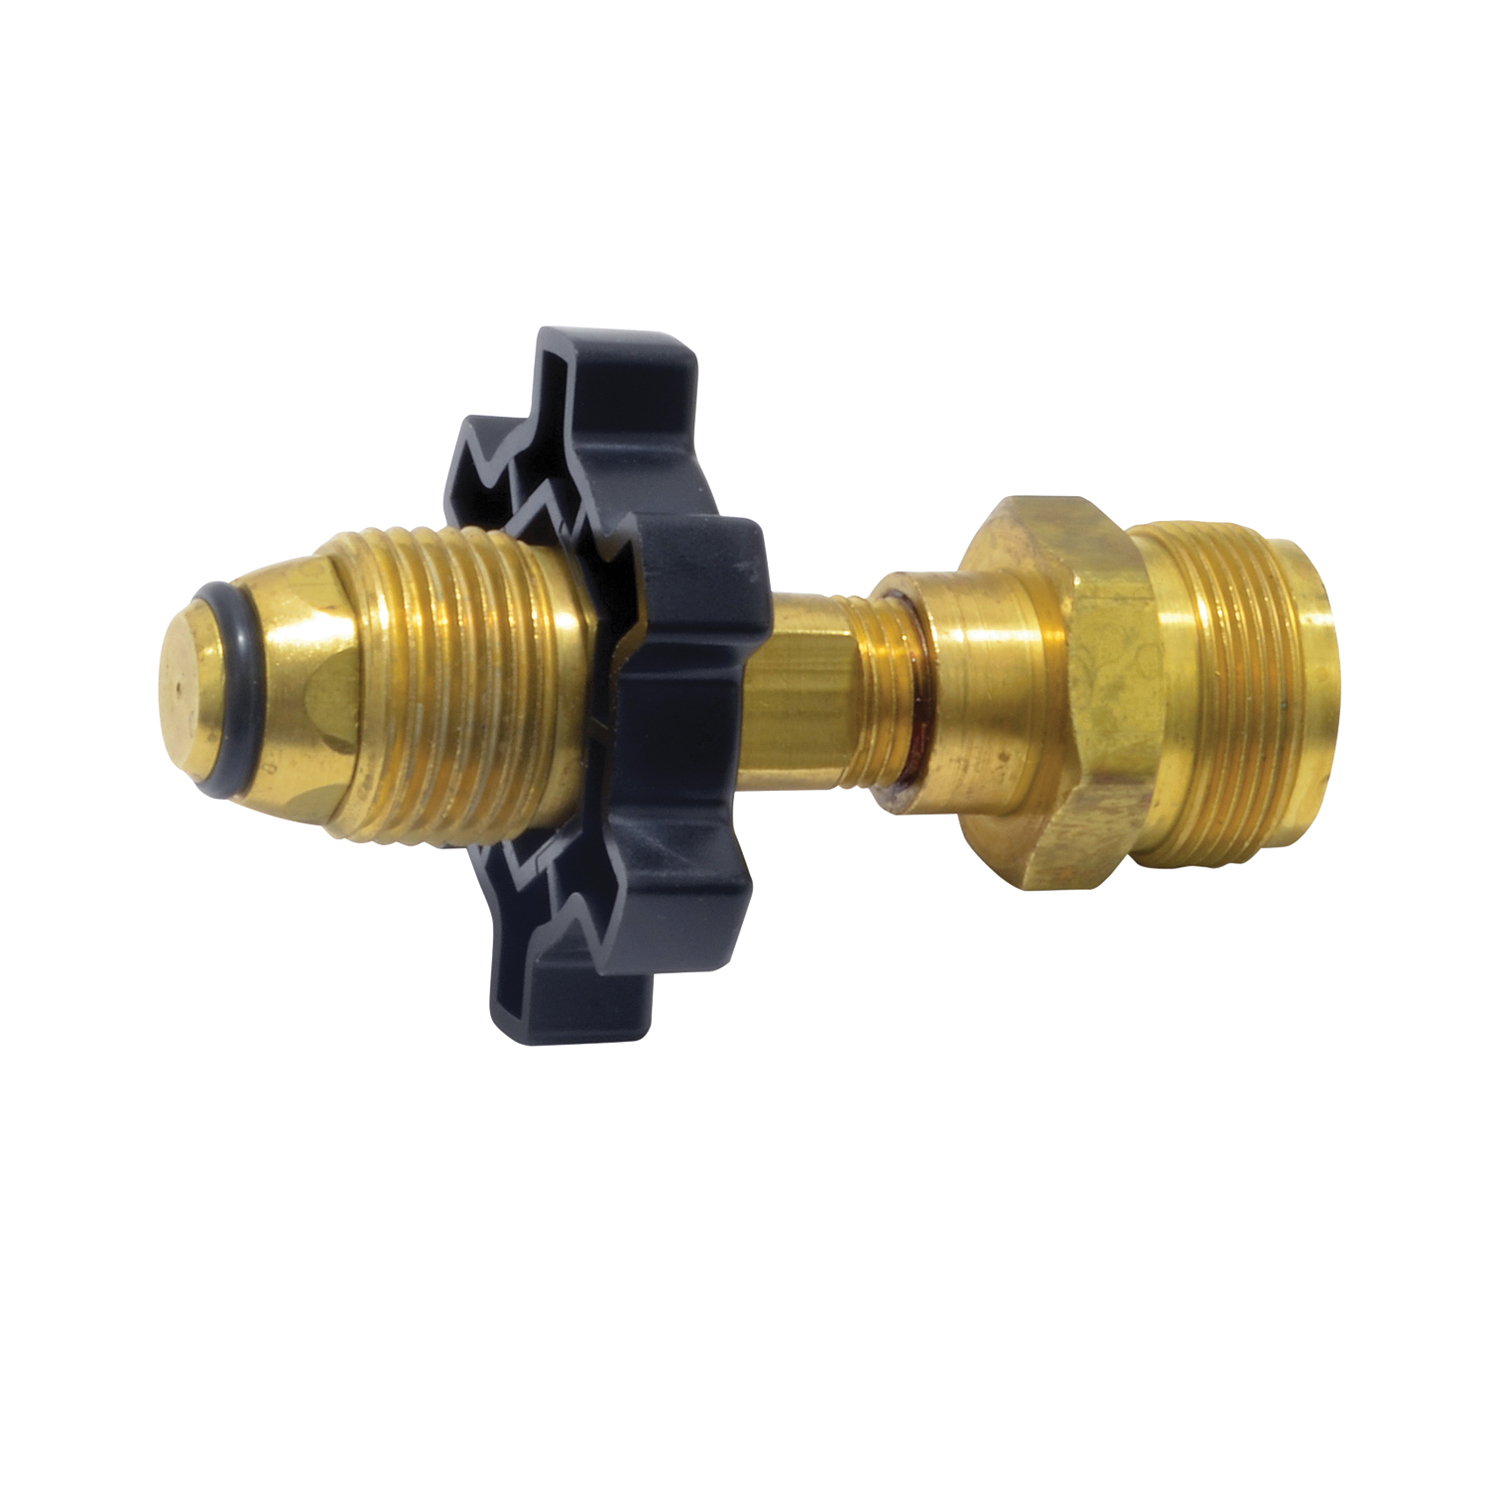 Mr. Heater F273758 Cylinder Adapter, Brass, Gold